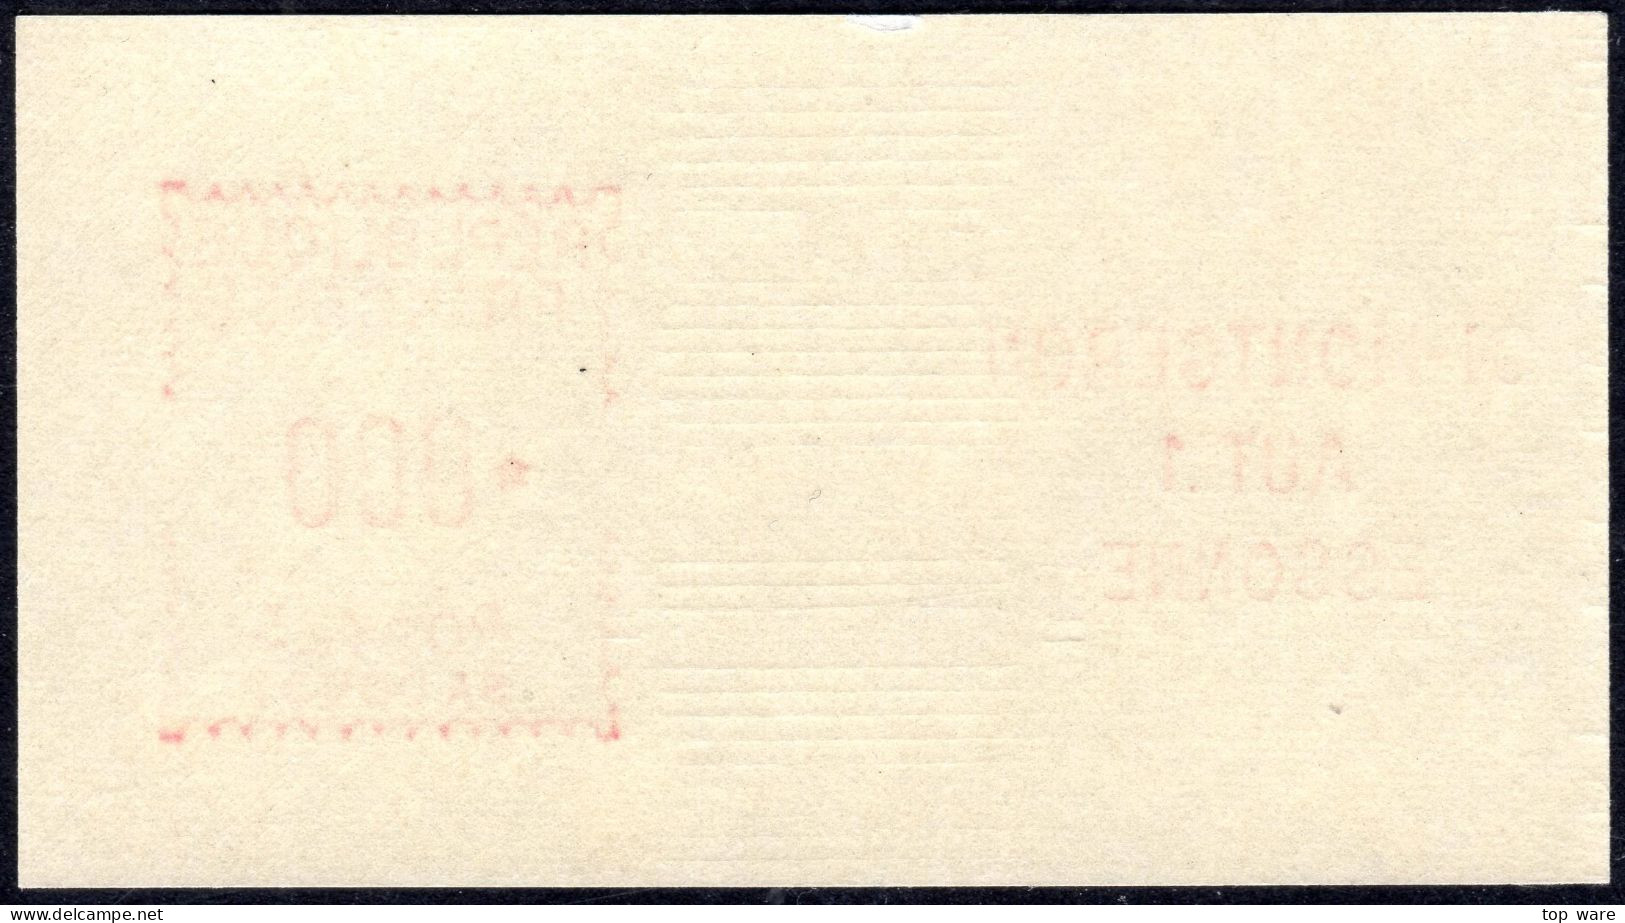 France MONTGERON ATM 2.2 I / Test Stamp 000 MNH / LSA Distributeurs Automatenmarken Vending Machine Safaa-Satas - 1969 Montgeron – Carta Bianca – Frama/Satas